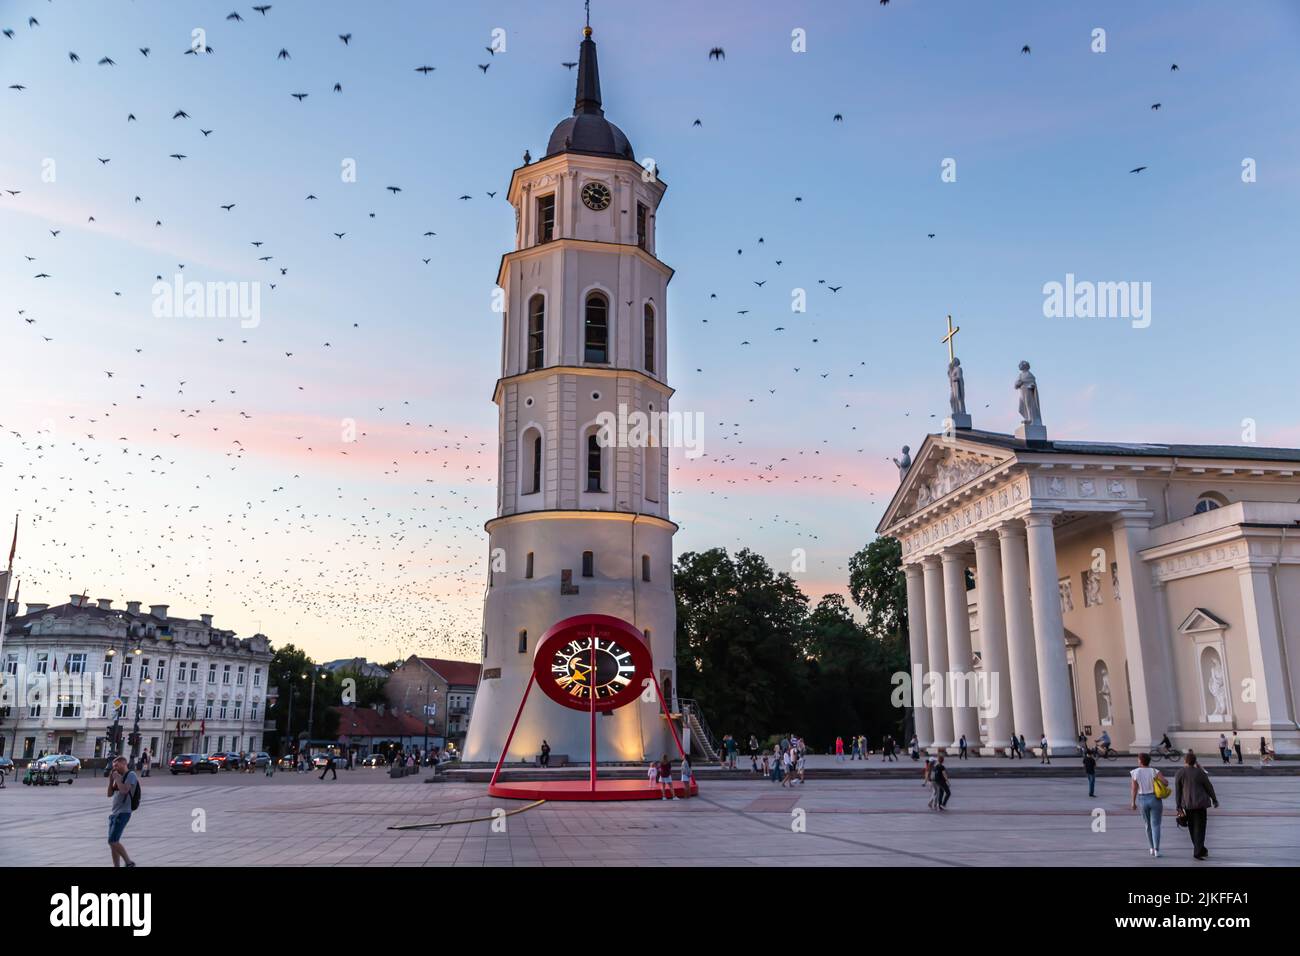 The capital of Lithuania - Vilnius Stock Photo